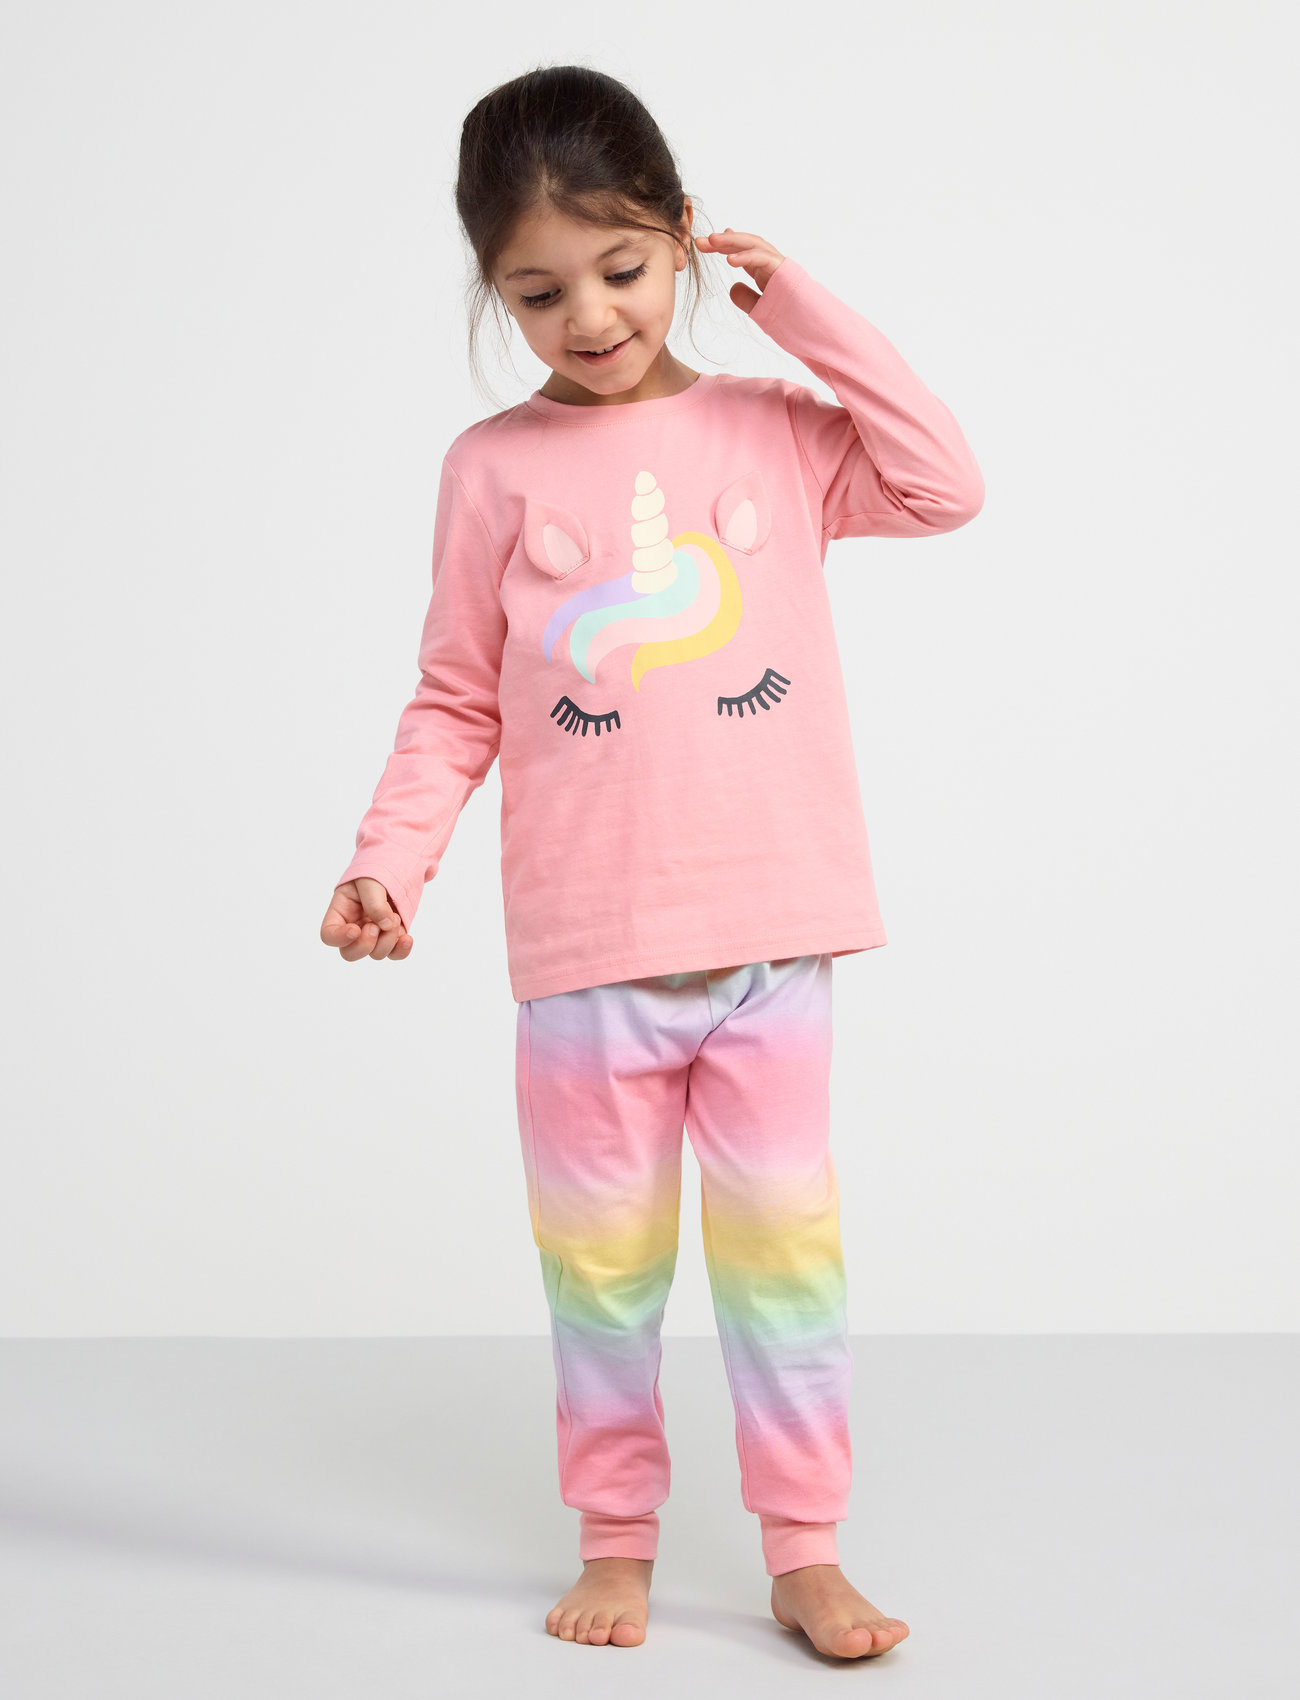 Voldoen Ontkennen component Lindex Pajama 3d Unicorn - Pyjama''s - Boozt.com